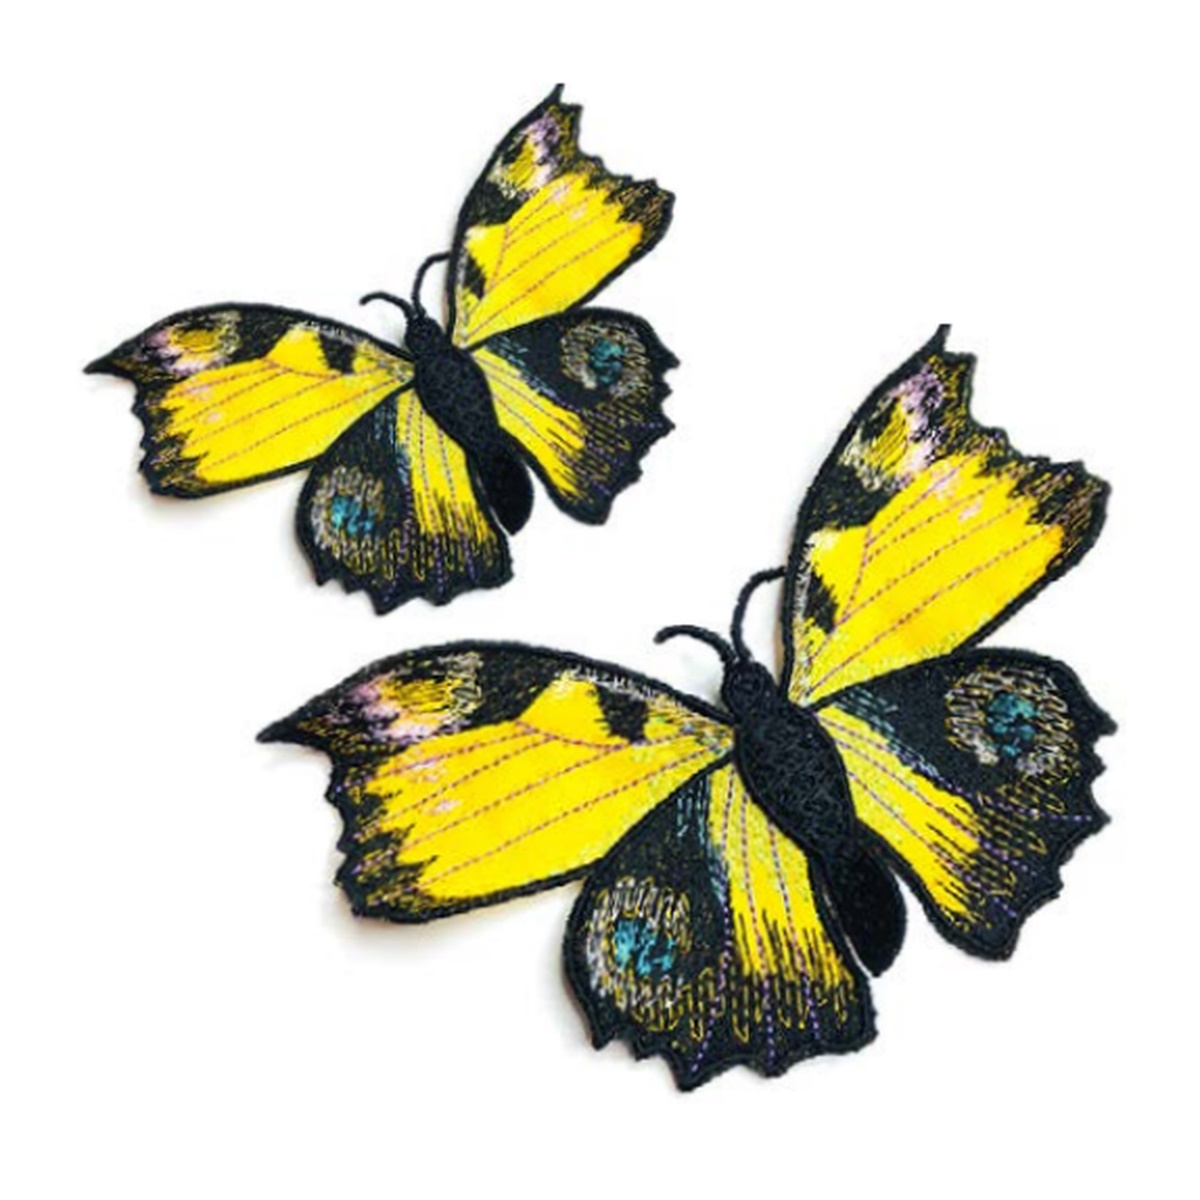 Stickdesign Fancy Butterflies (Download)